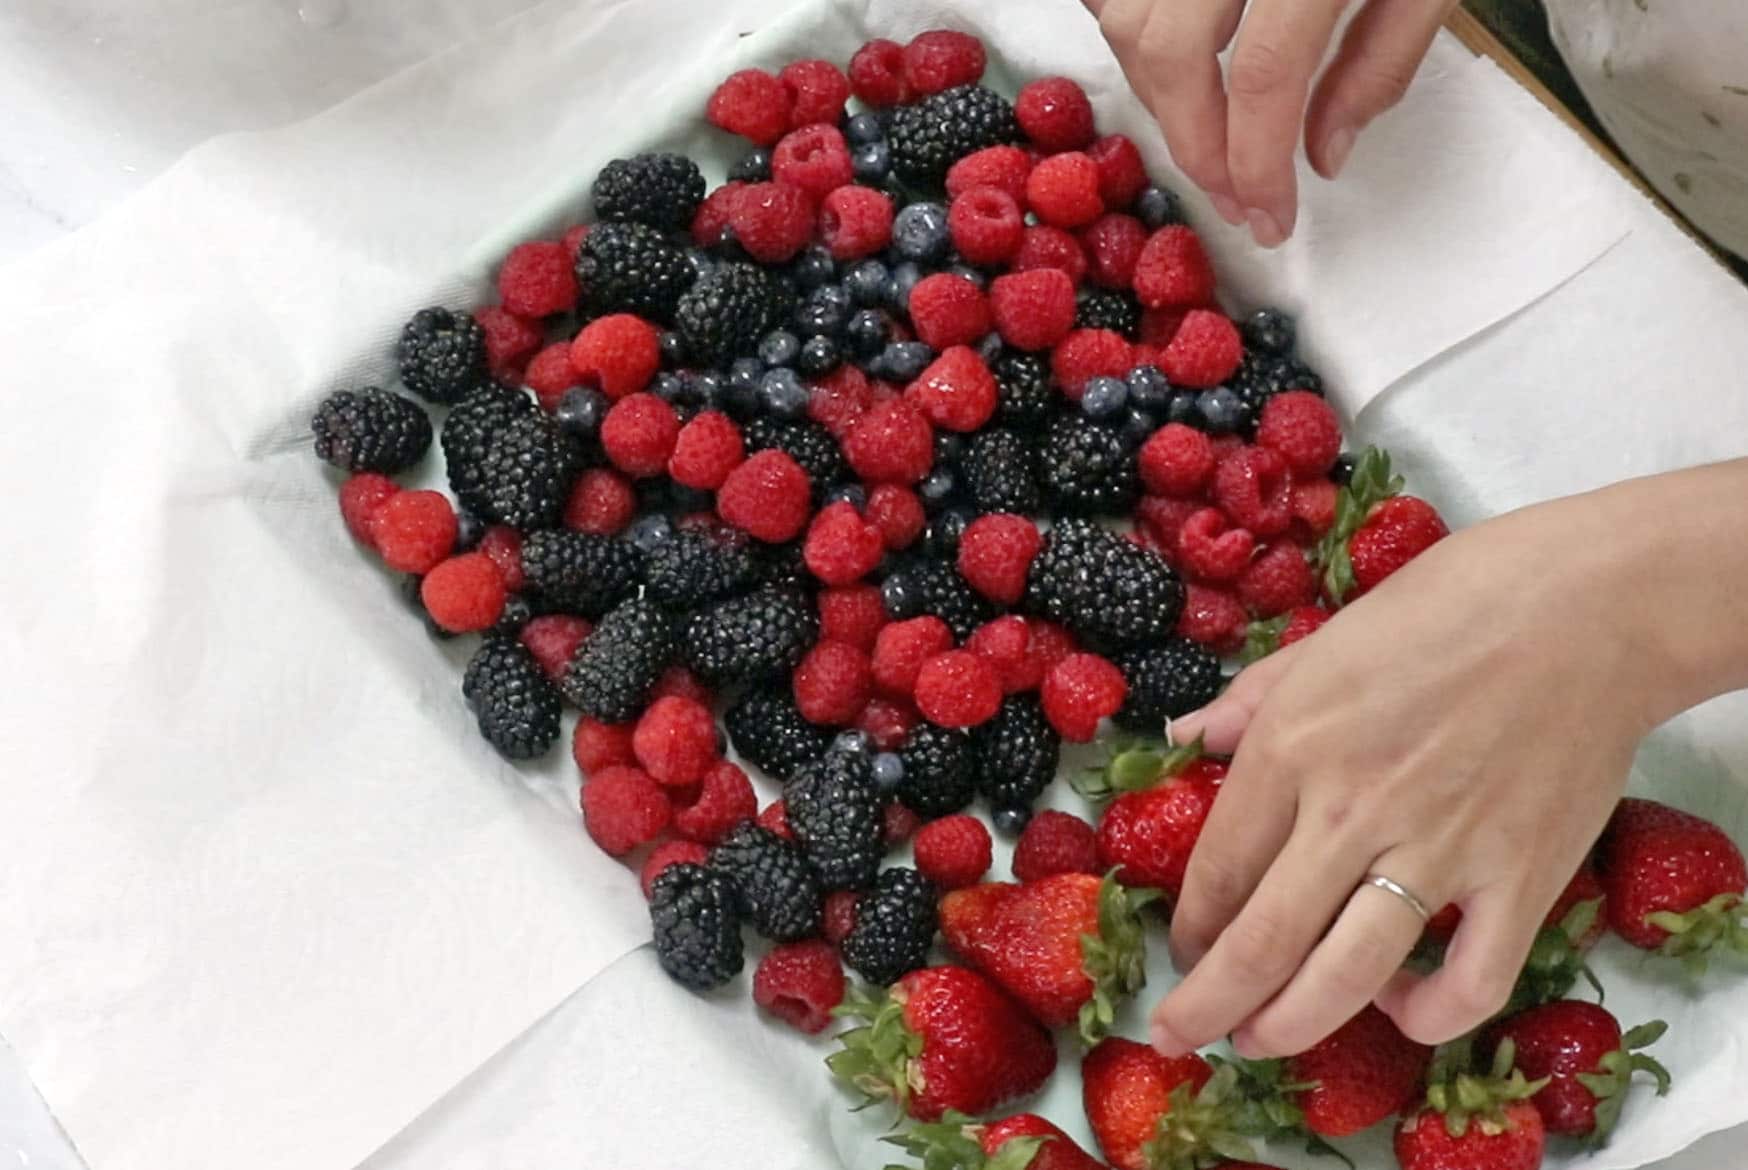 drying berries on paper towel